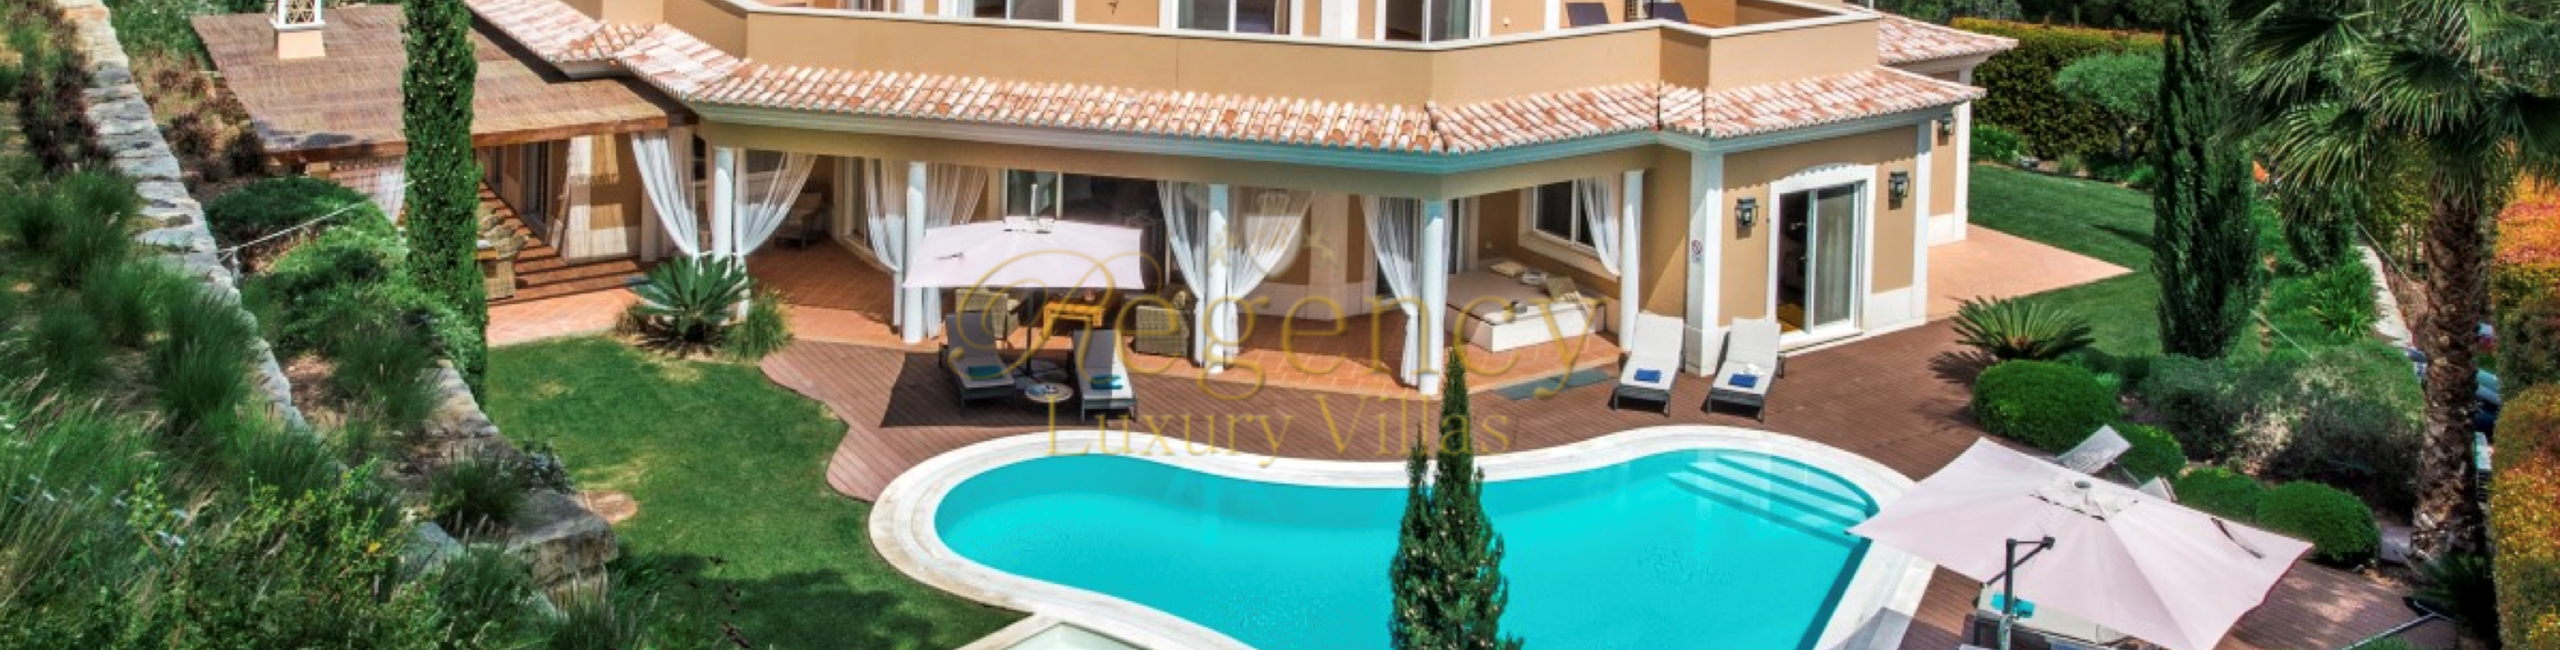 Quinta Do Lago Luxury Villa To Rent With 5 Bedrooms